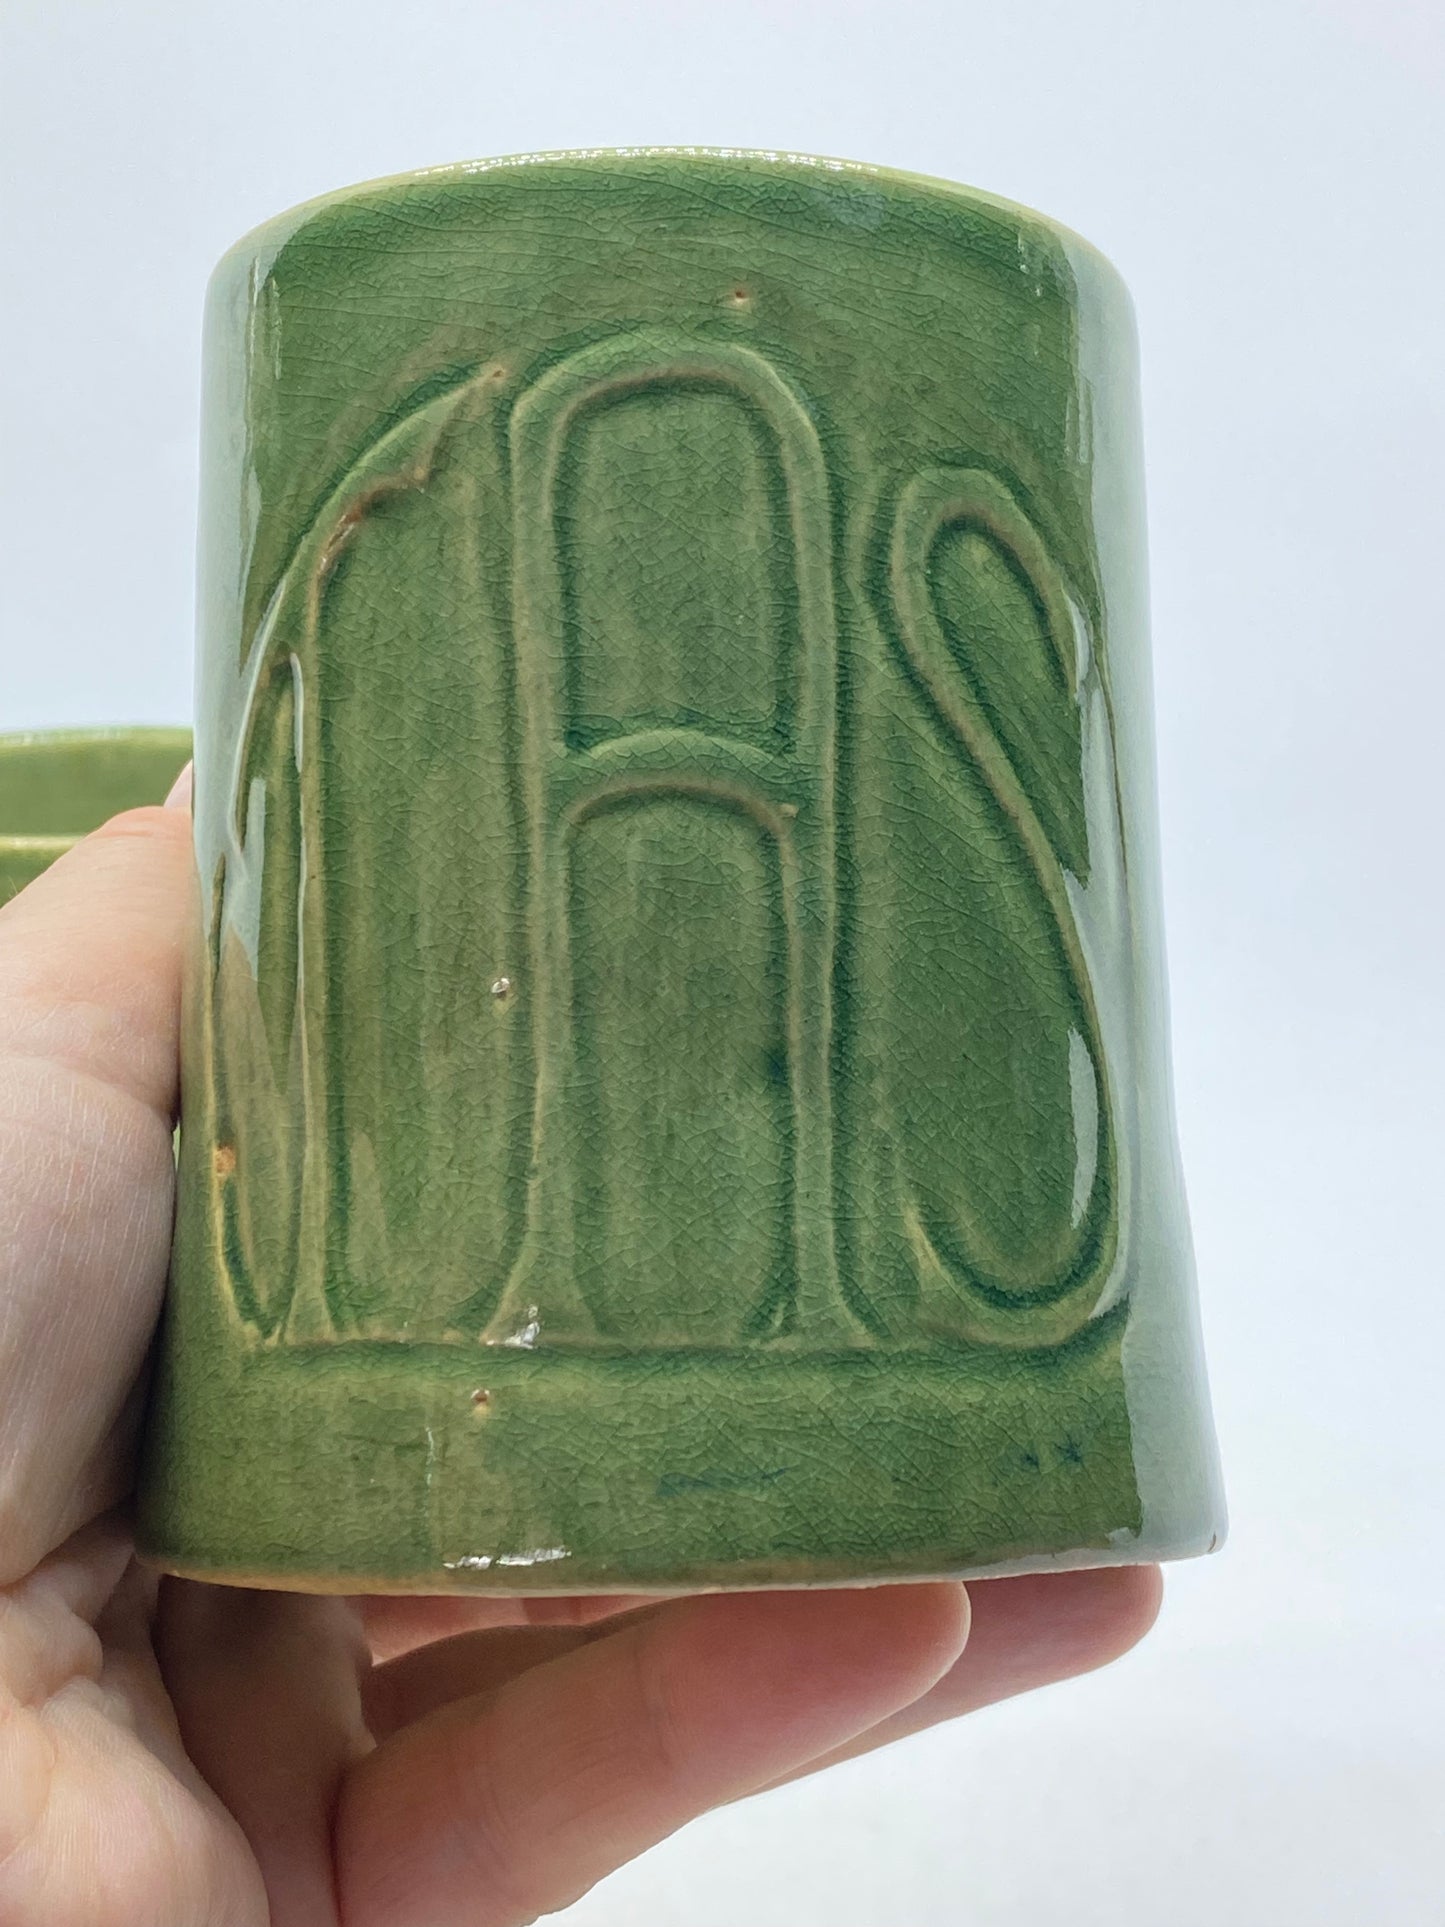 1950s TAS pottery Tourist Cups (2) -1953